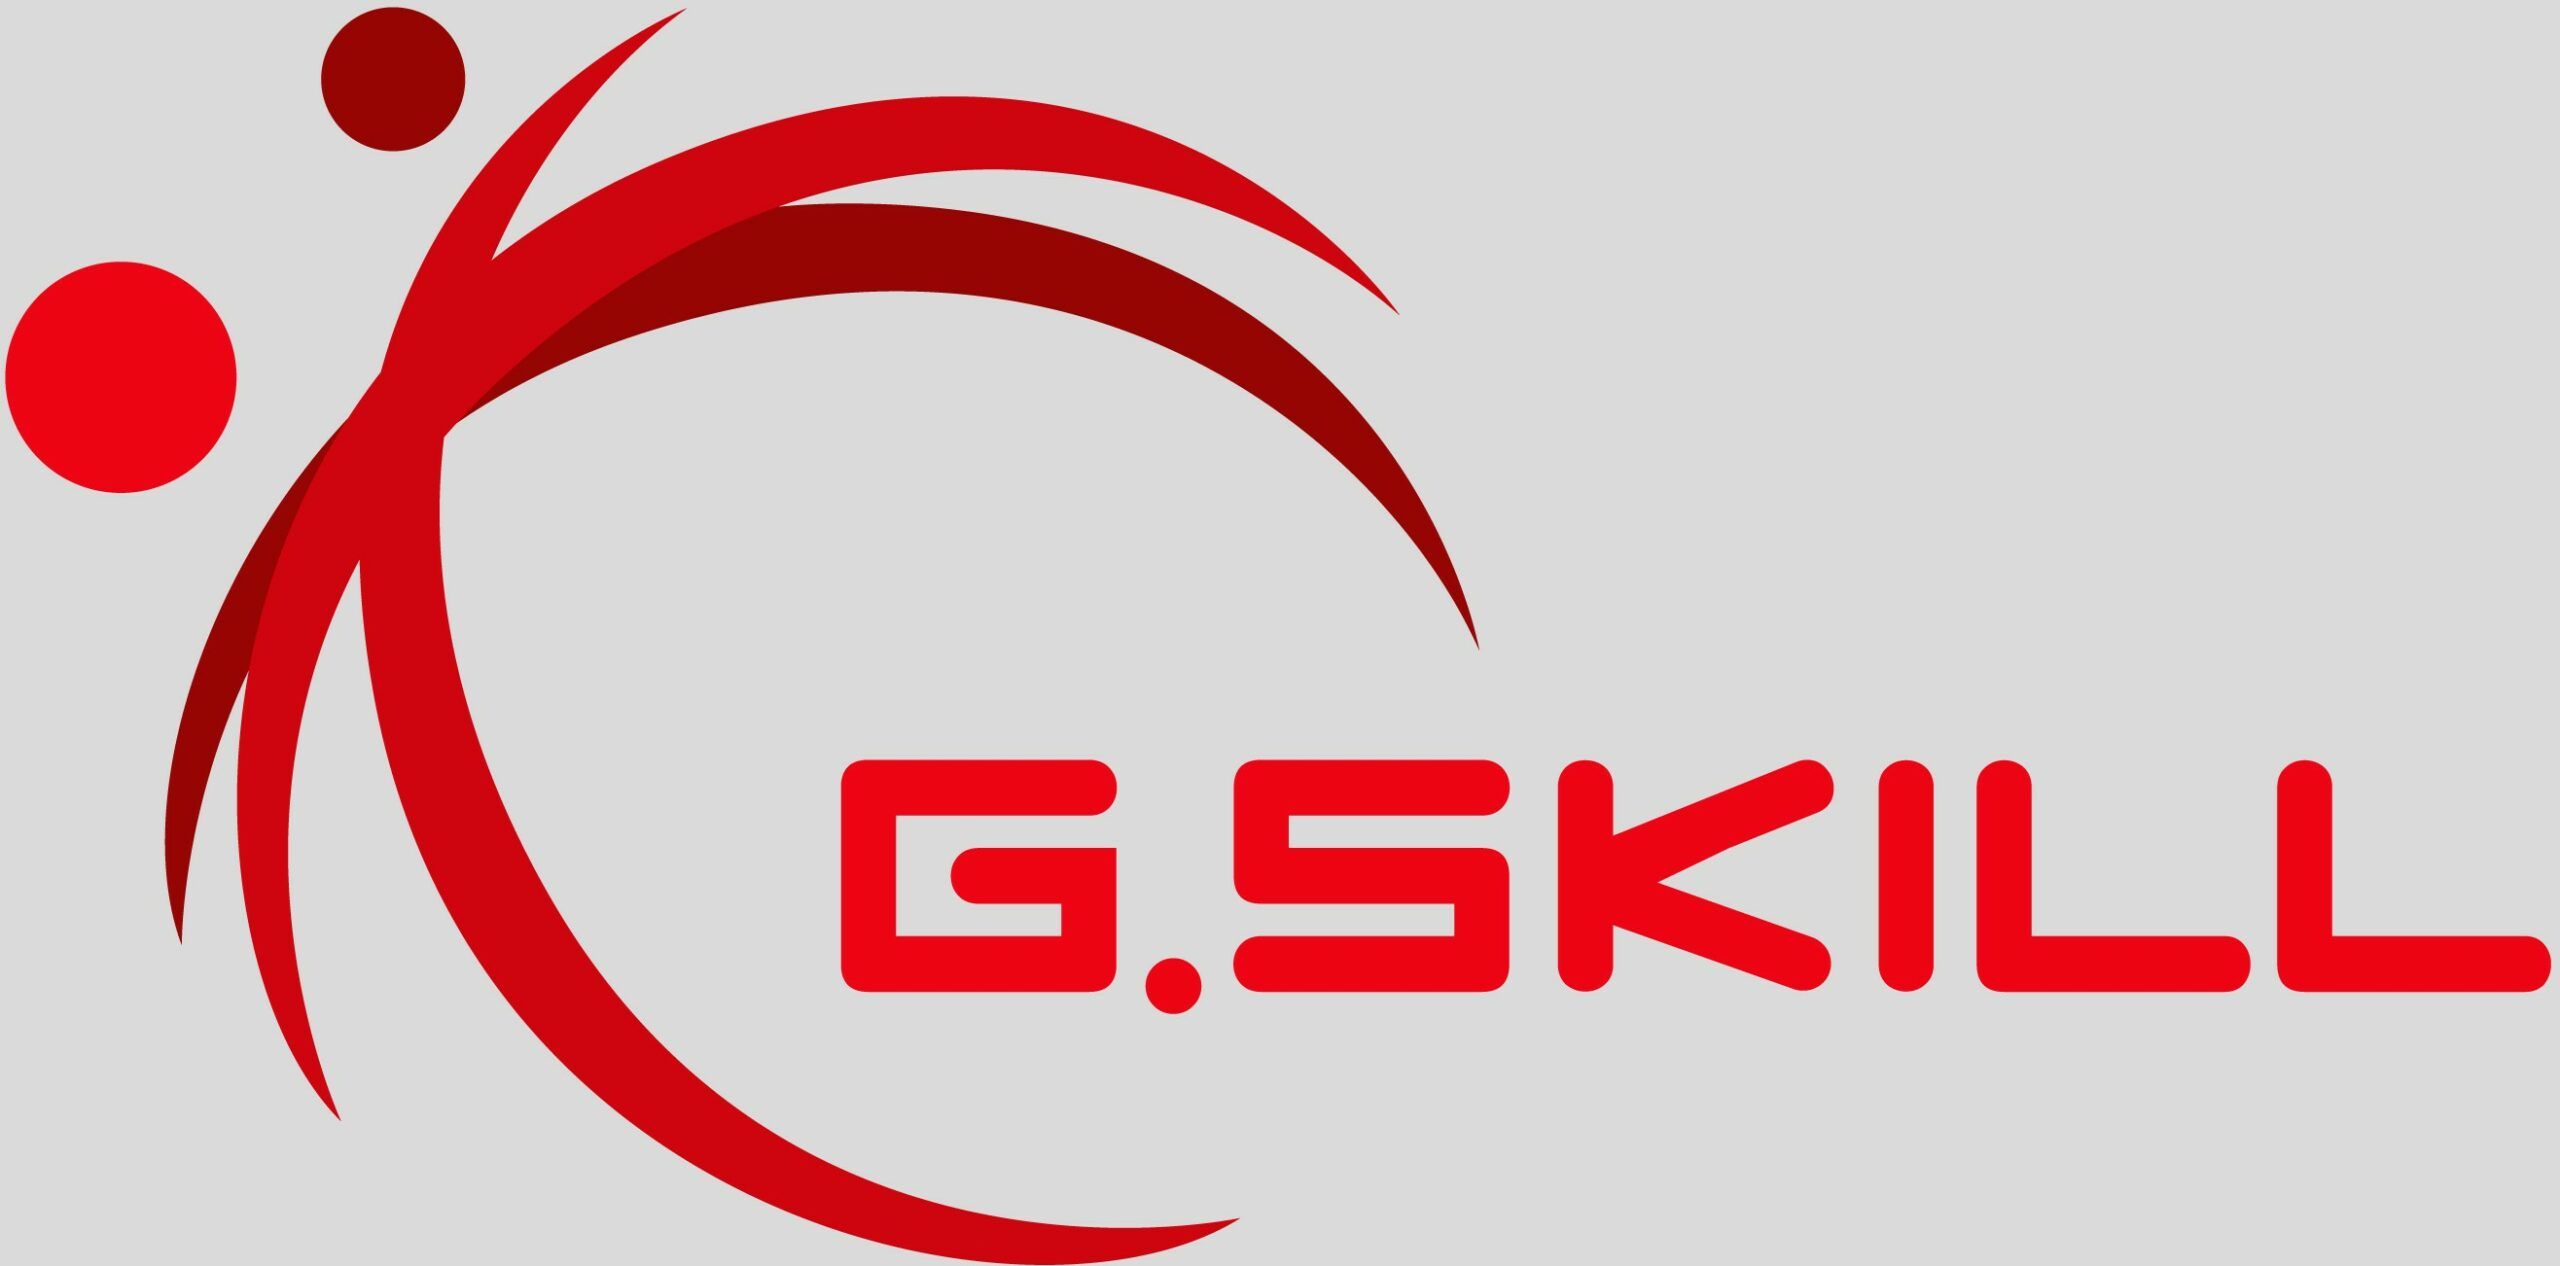 4k G Skill Wallpaper. Wallpaper, Skills, Background image